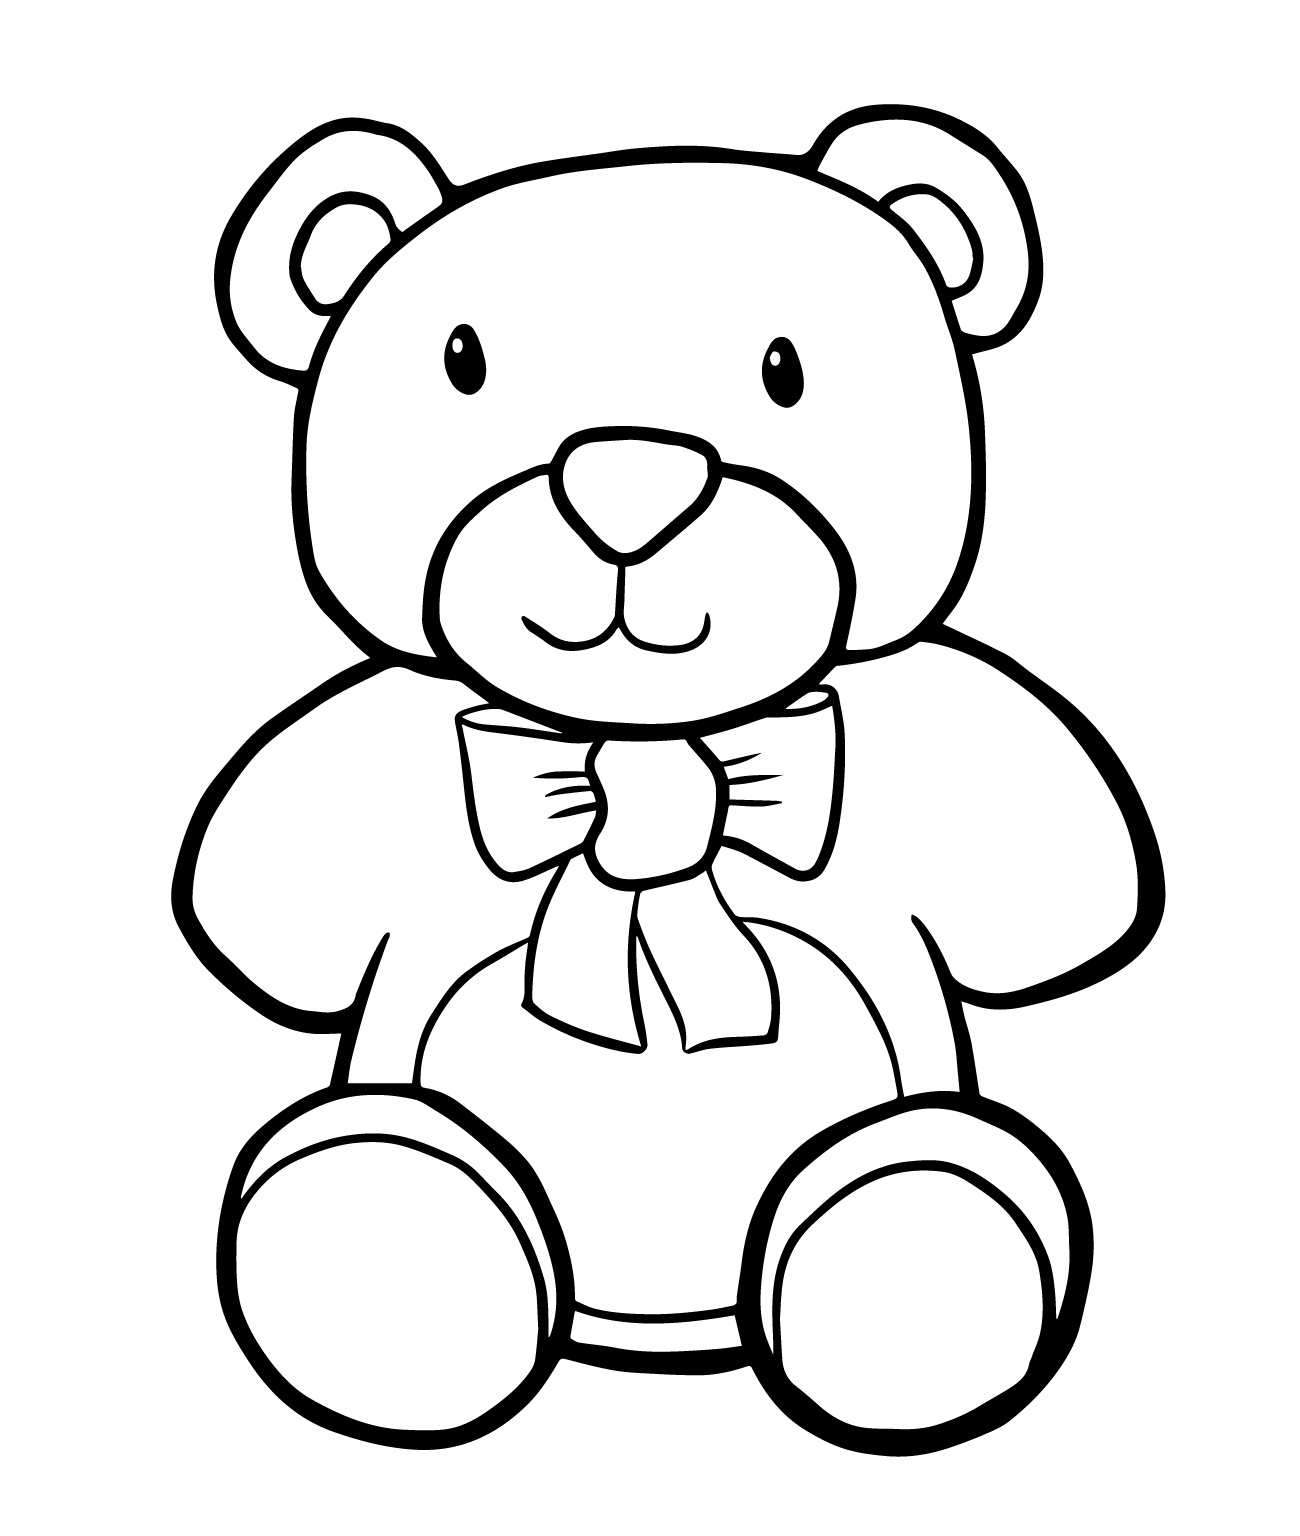 Sad Teddy Bear Beautiful Image Drawing  Sad Teddy Bear Drawing PNG Image   Transparent PNG Free Download on SeekPNG